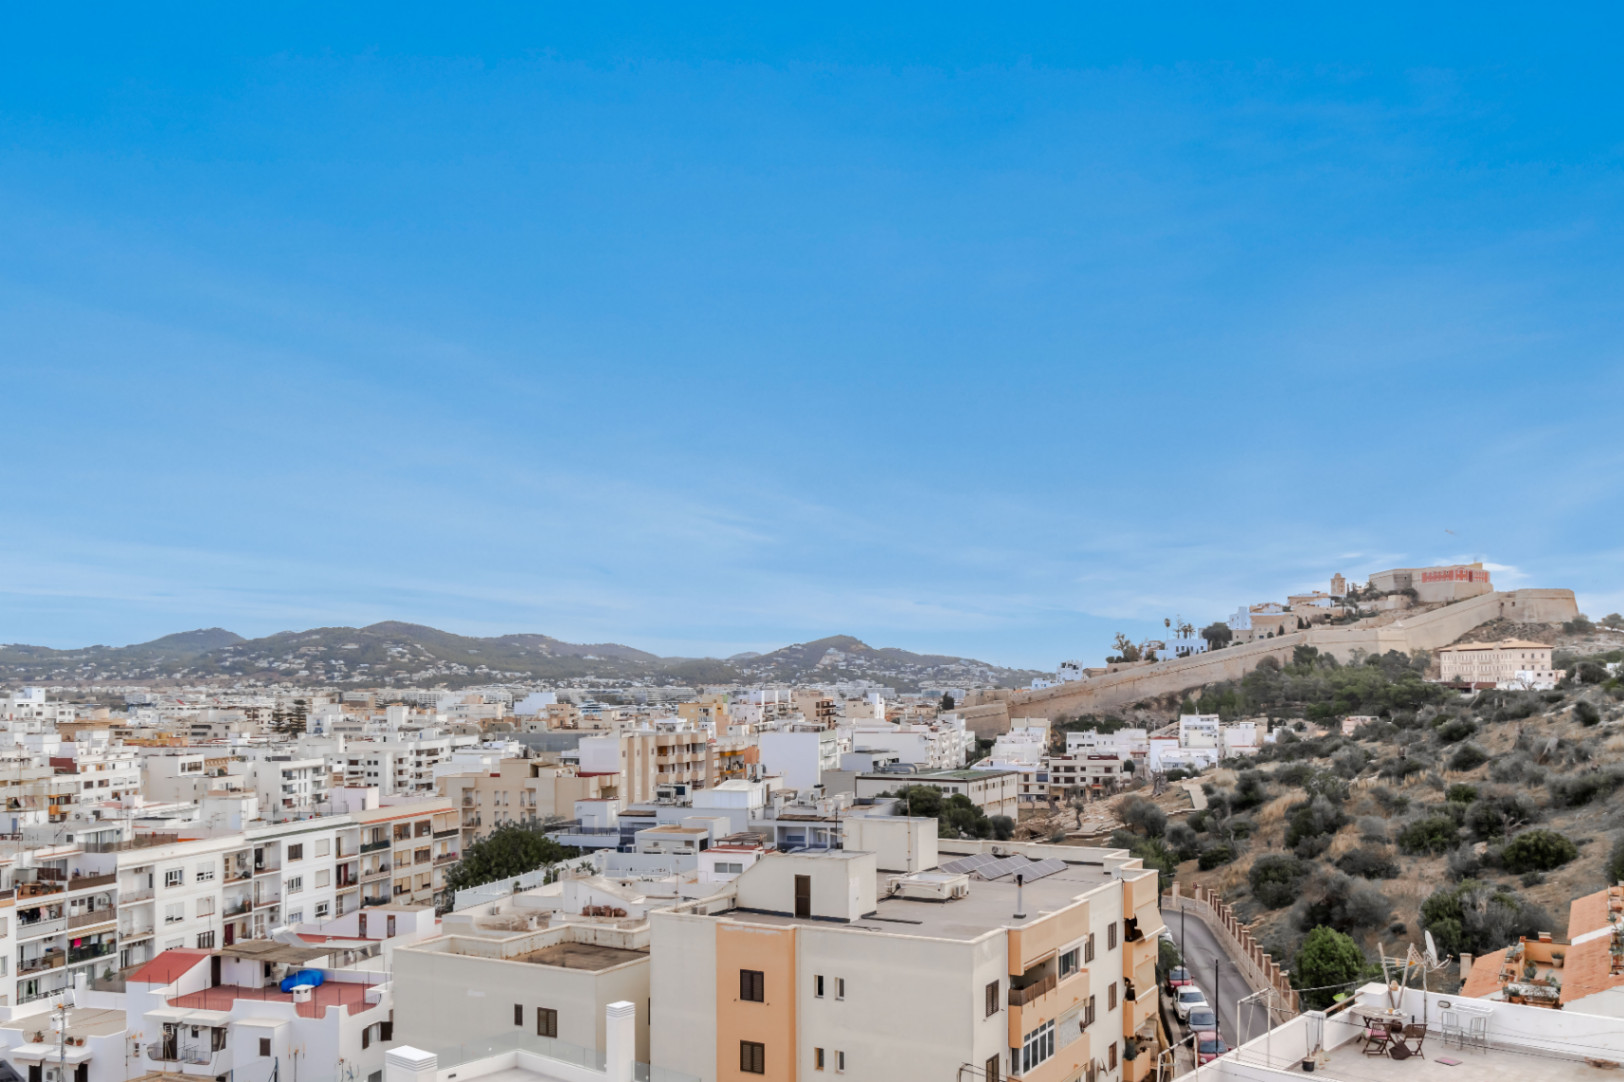 Apartment in Ibiza with views of Dalt Vila